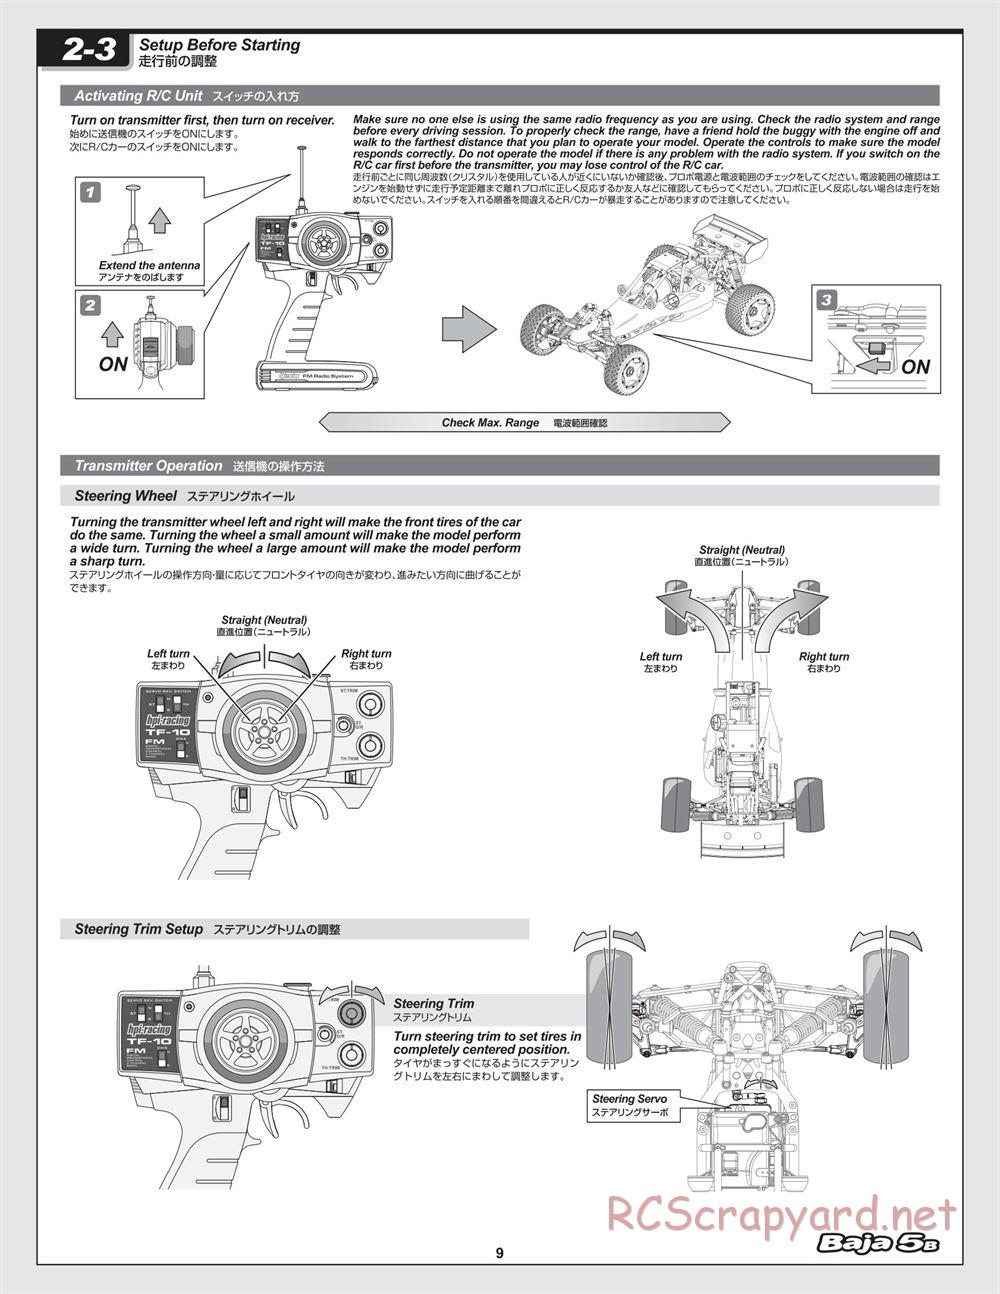 HPI - Baja 5B - Manual - Page 9